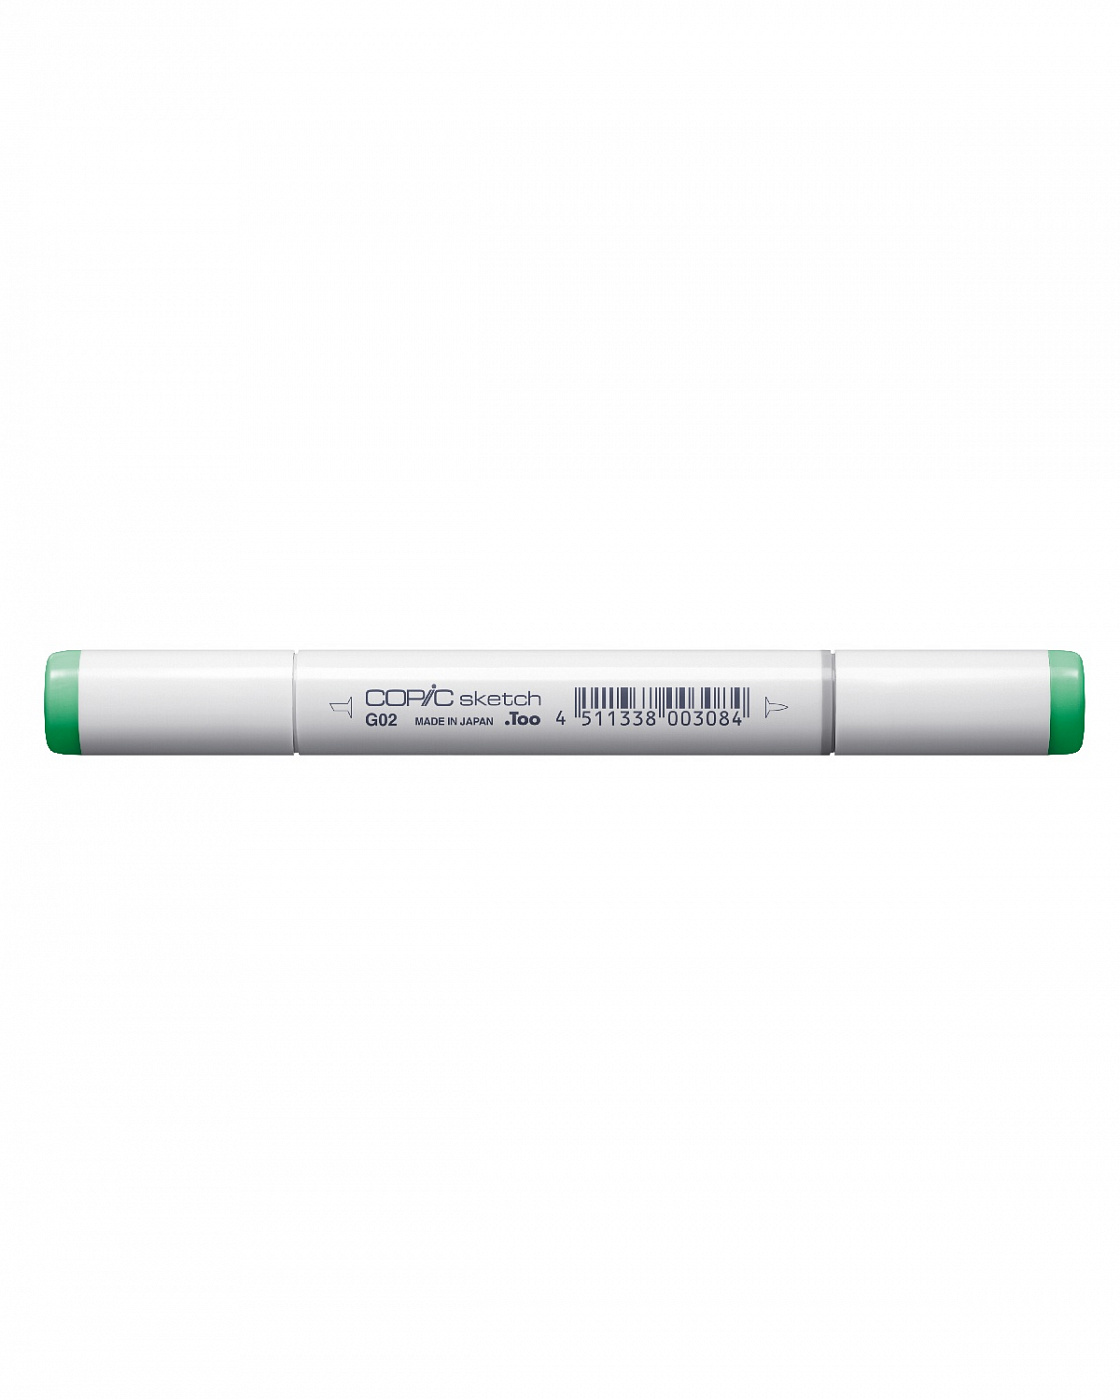 Маркер COPIC sketch G02 (спектральный зеленый, spectrum green) маркер copic sketch g07 зеленый нил nile green